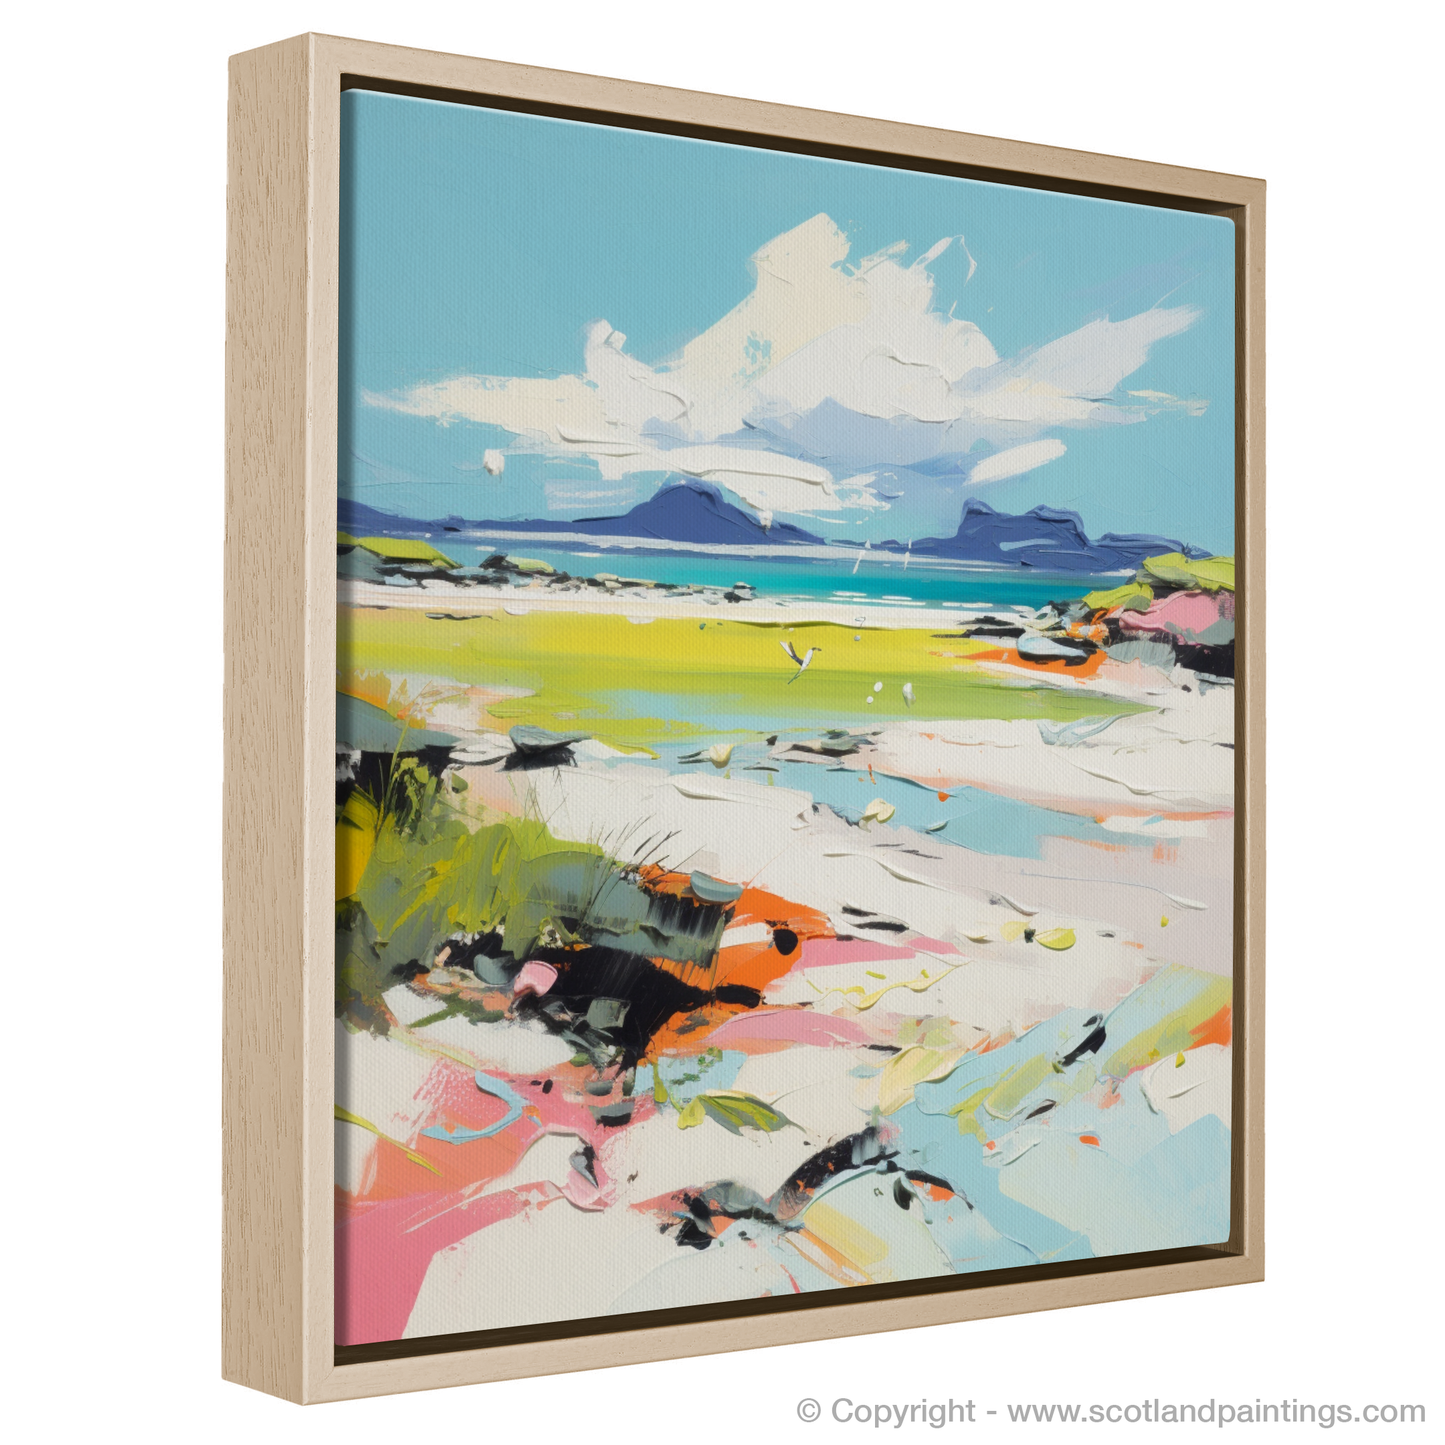 Painting and Art Print of Camusdarach Beach, Arisaig entitled "Arisaig's Coastal Reverie: Abstract Ode to Camusdarach Beach".